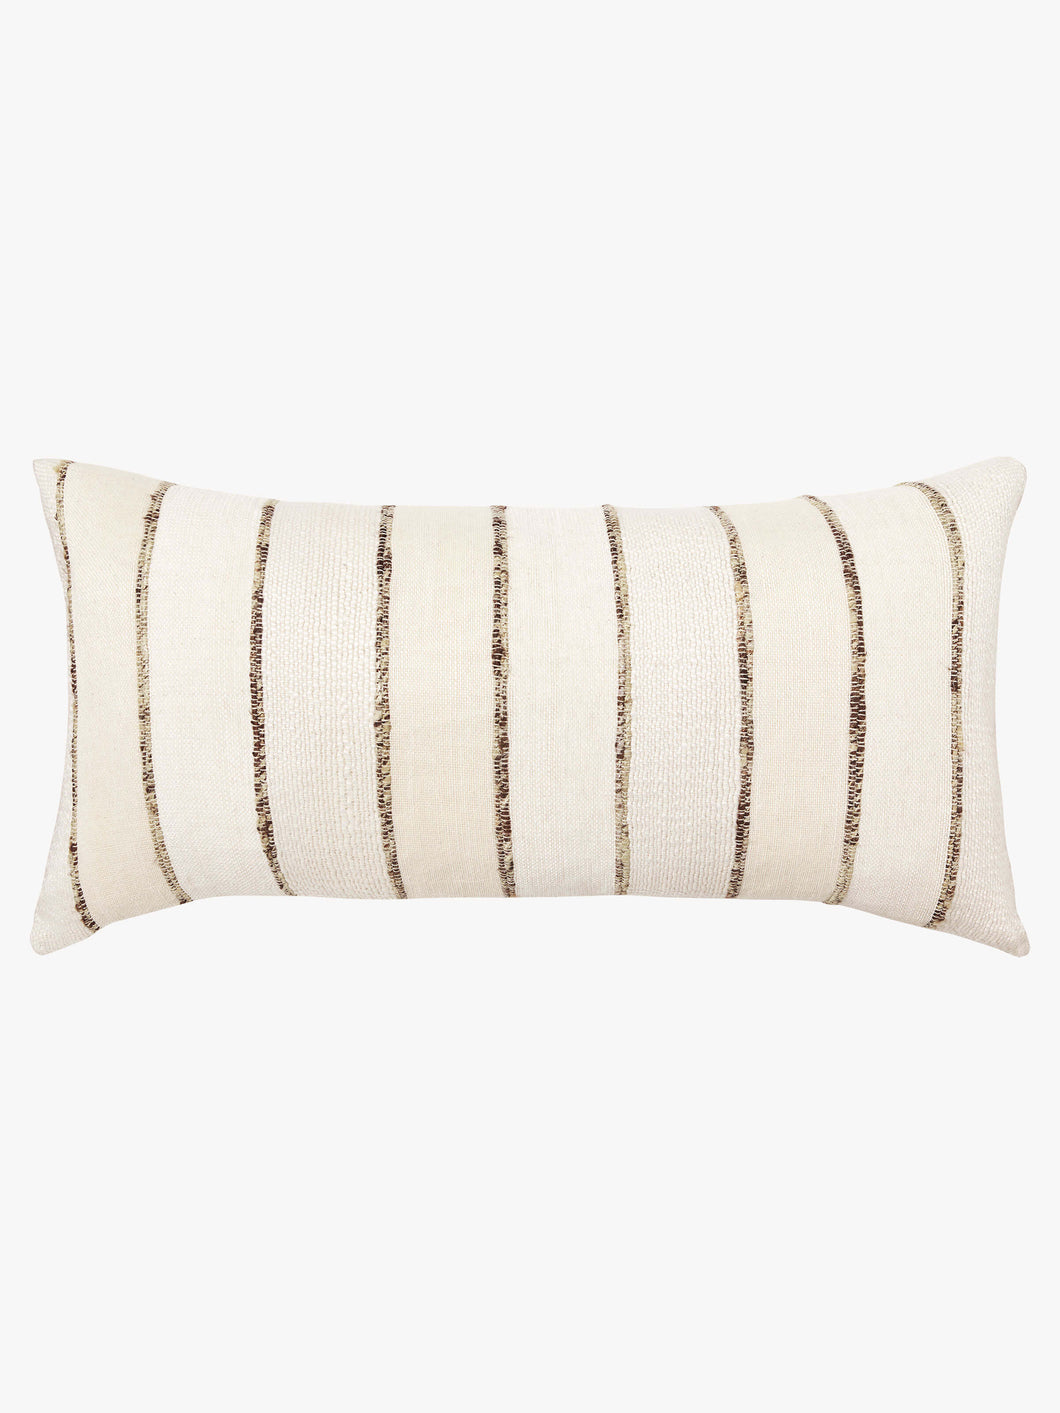 Montana Ivory Lumbar Cushion by L&M Home available through Magnolia Lane